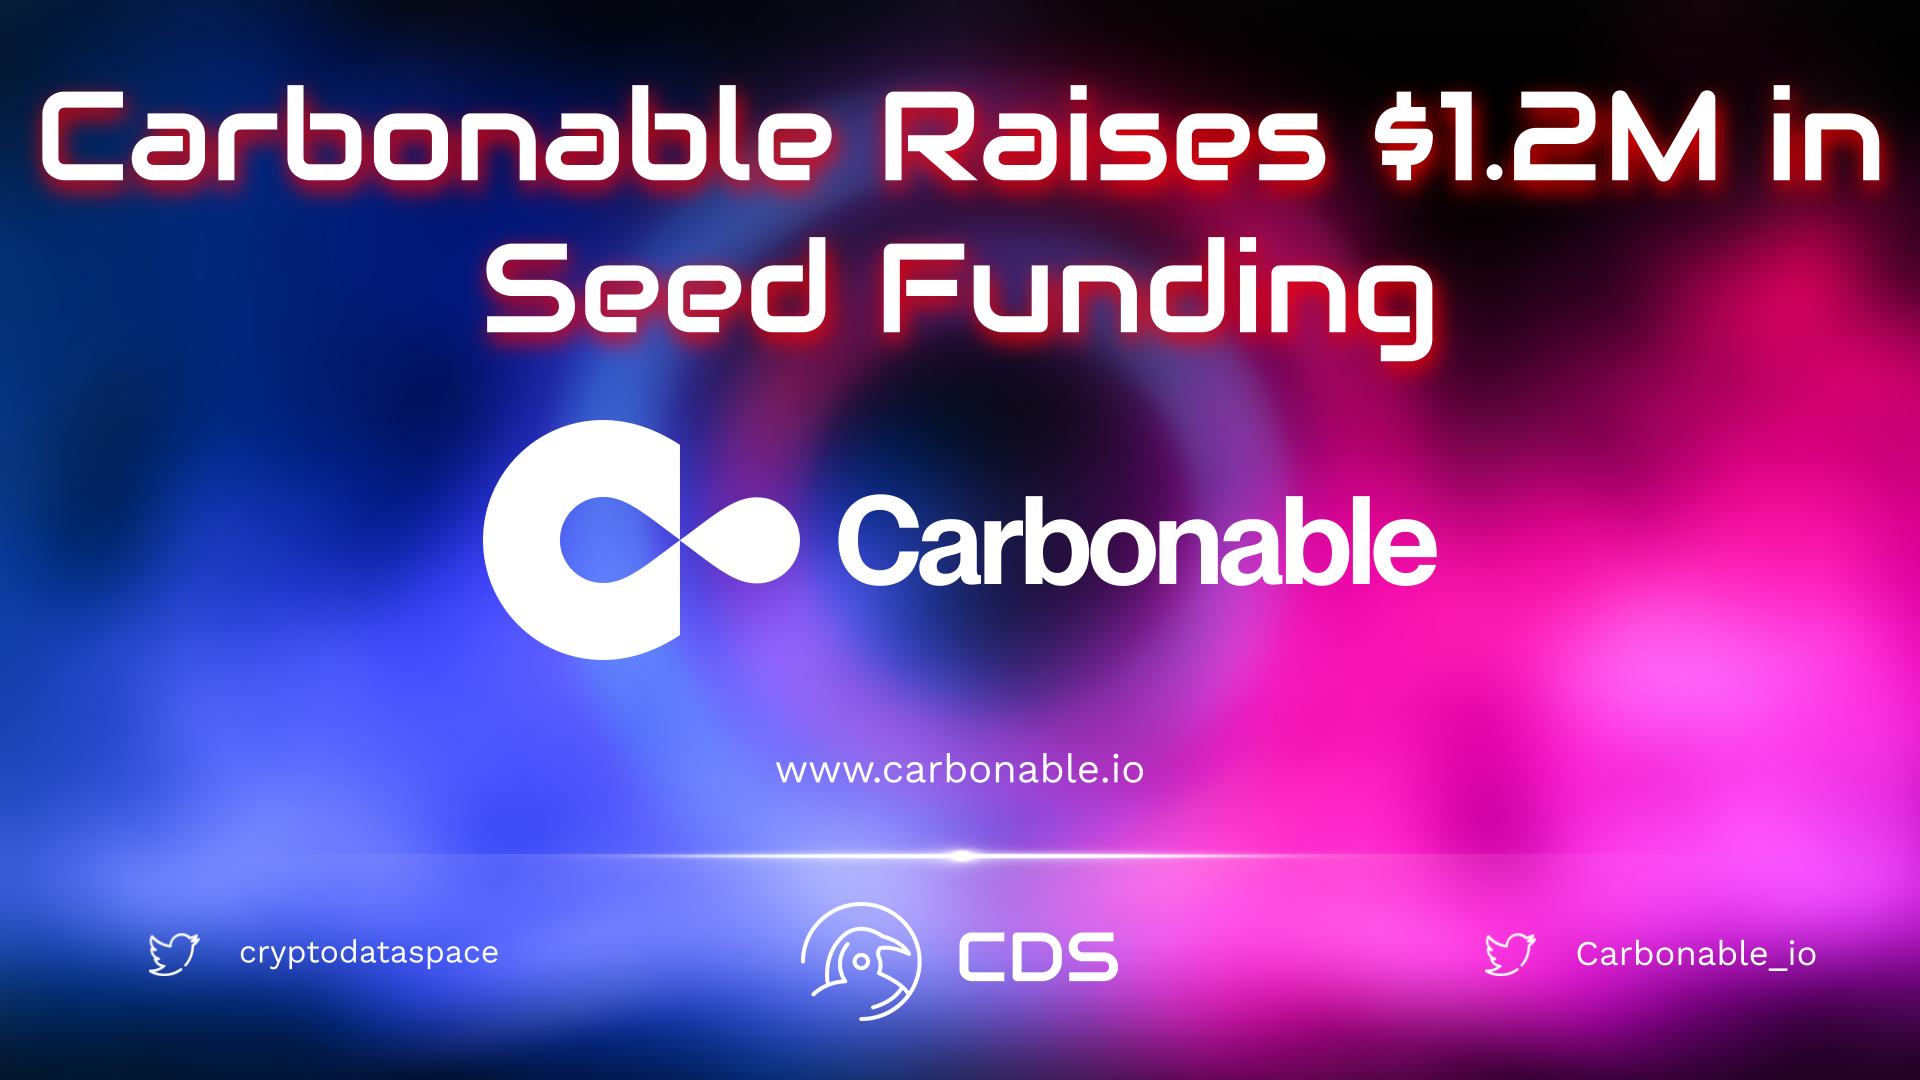 Carbonable Raises $1.2M in Seed Funding